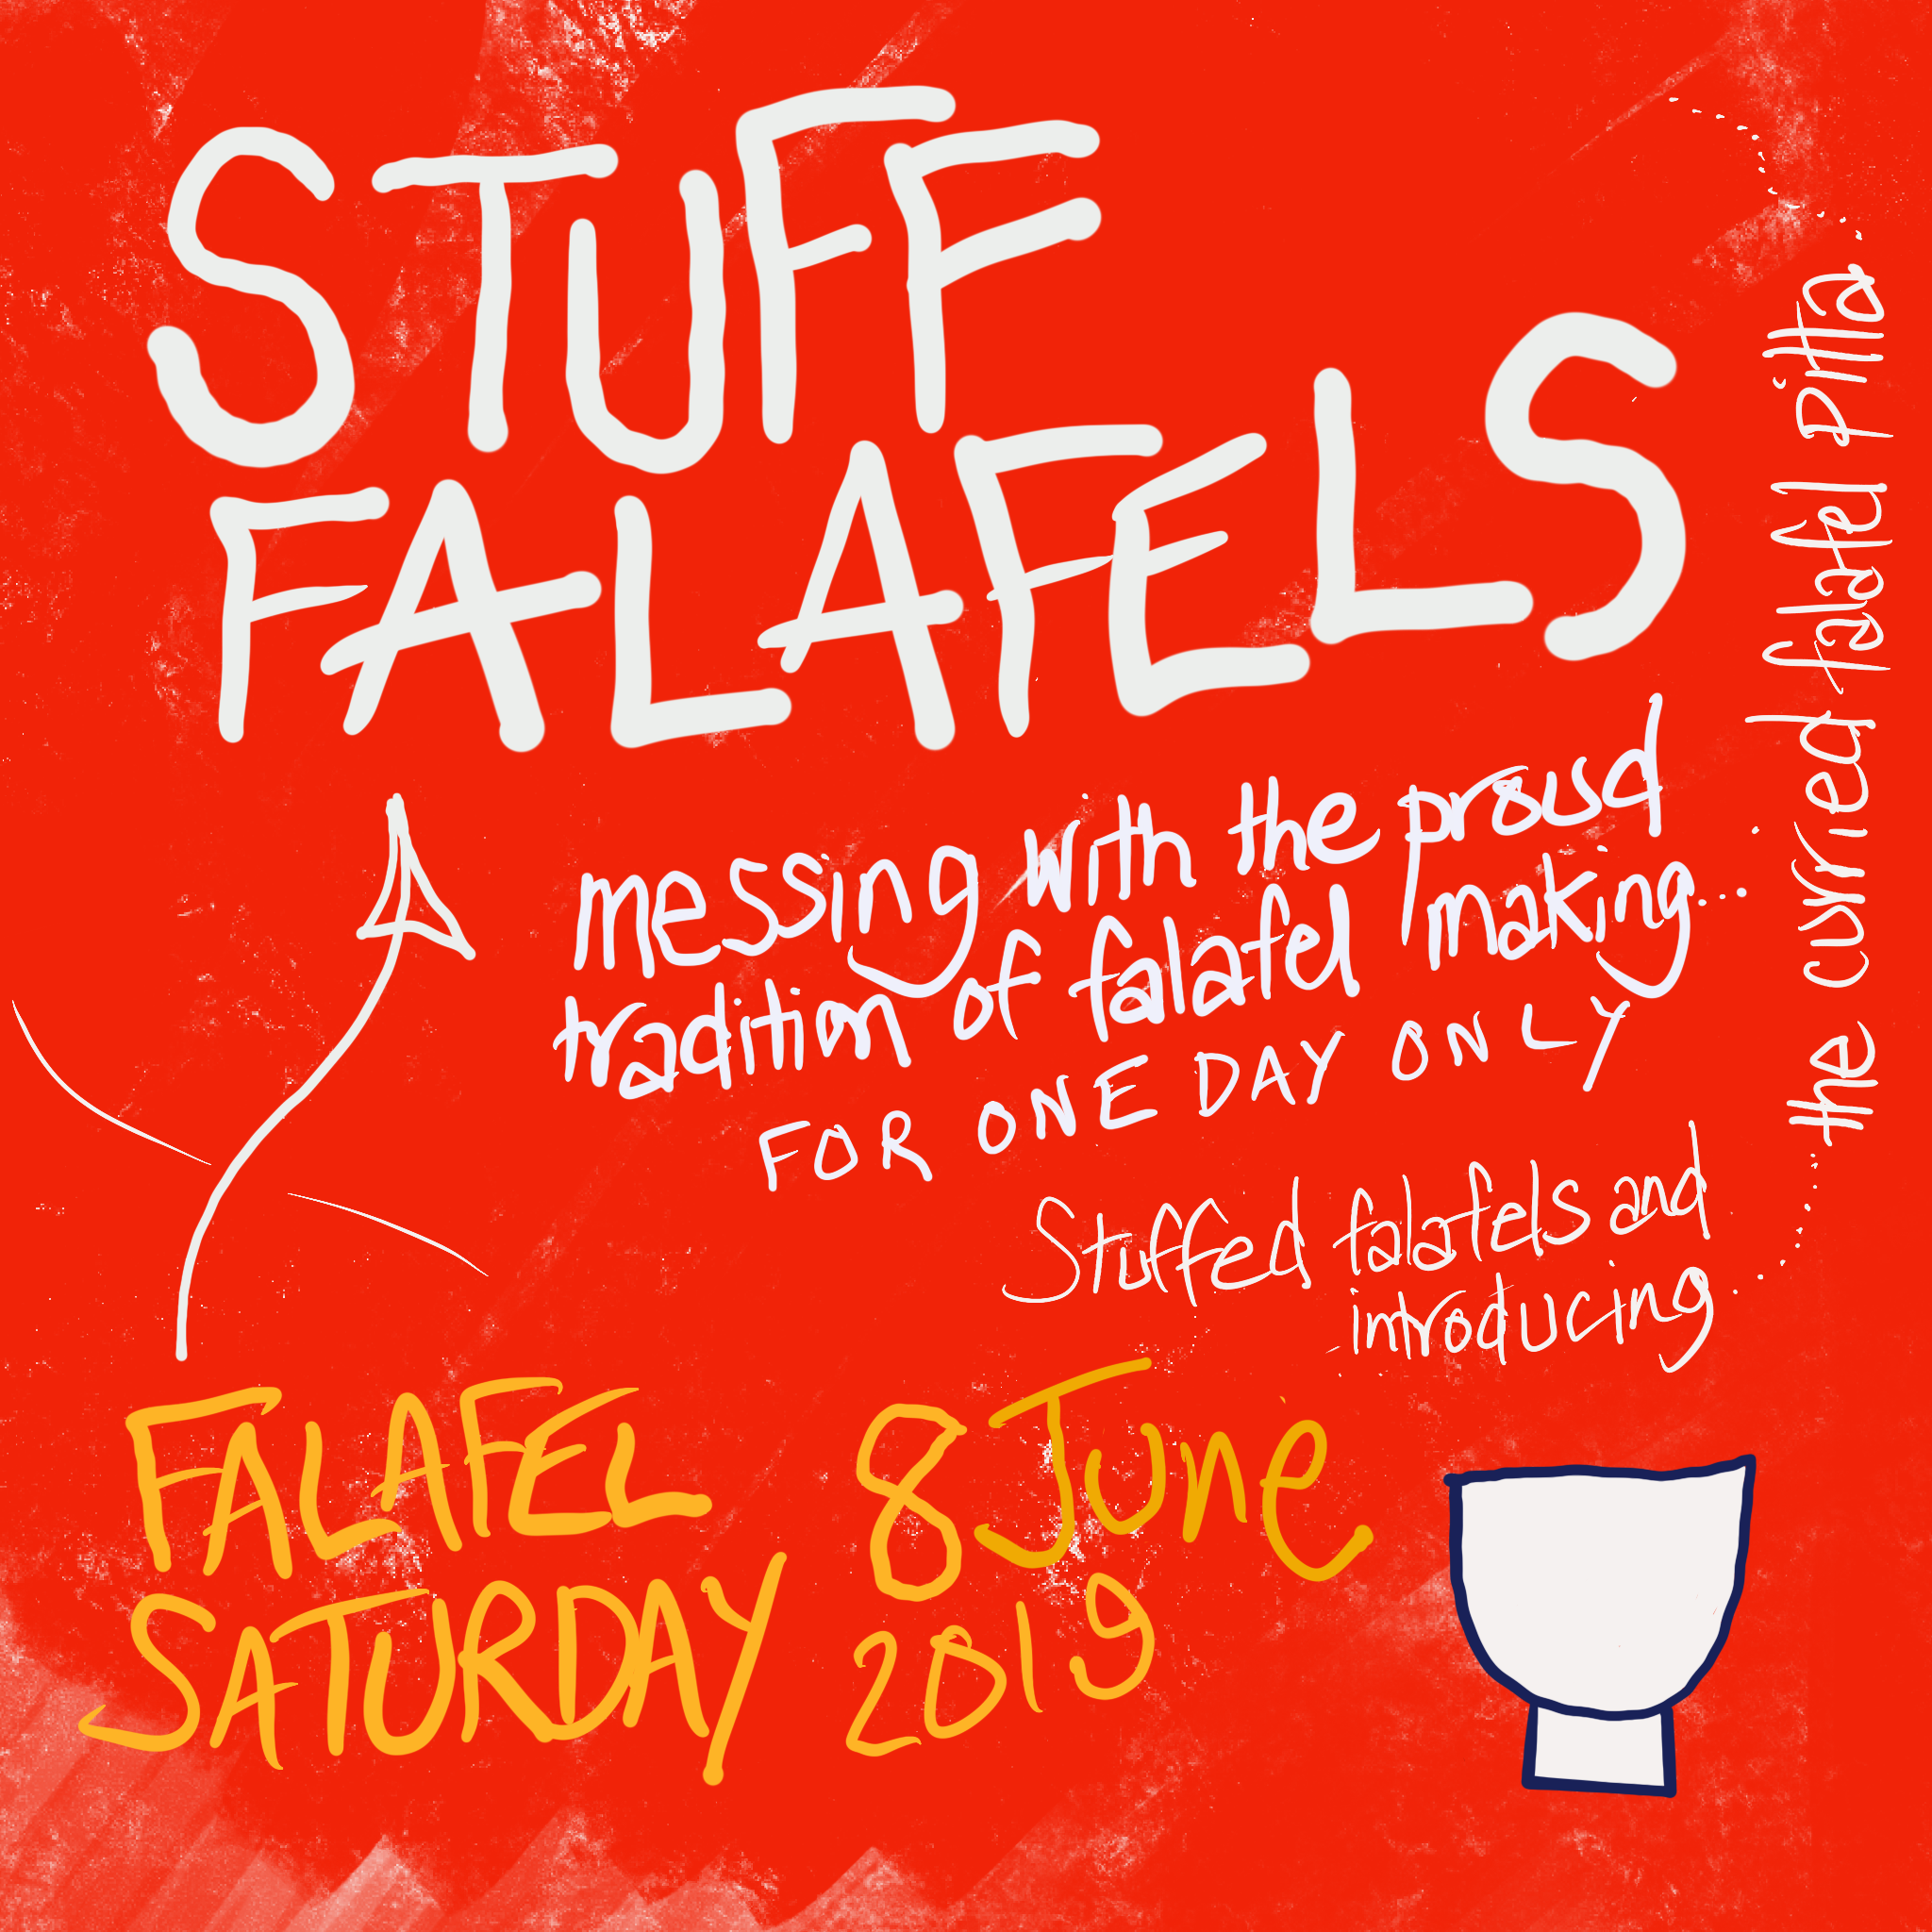 Falafel weekend poster